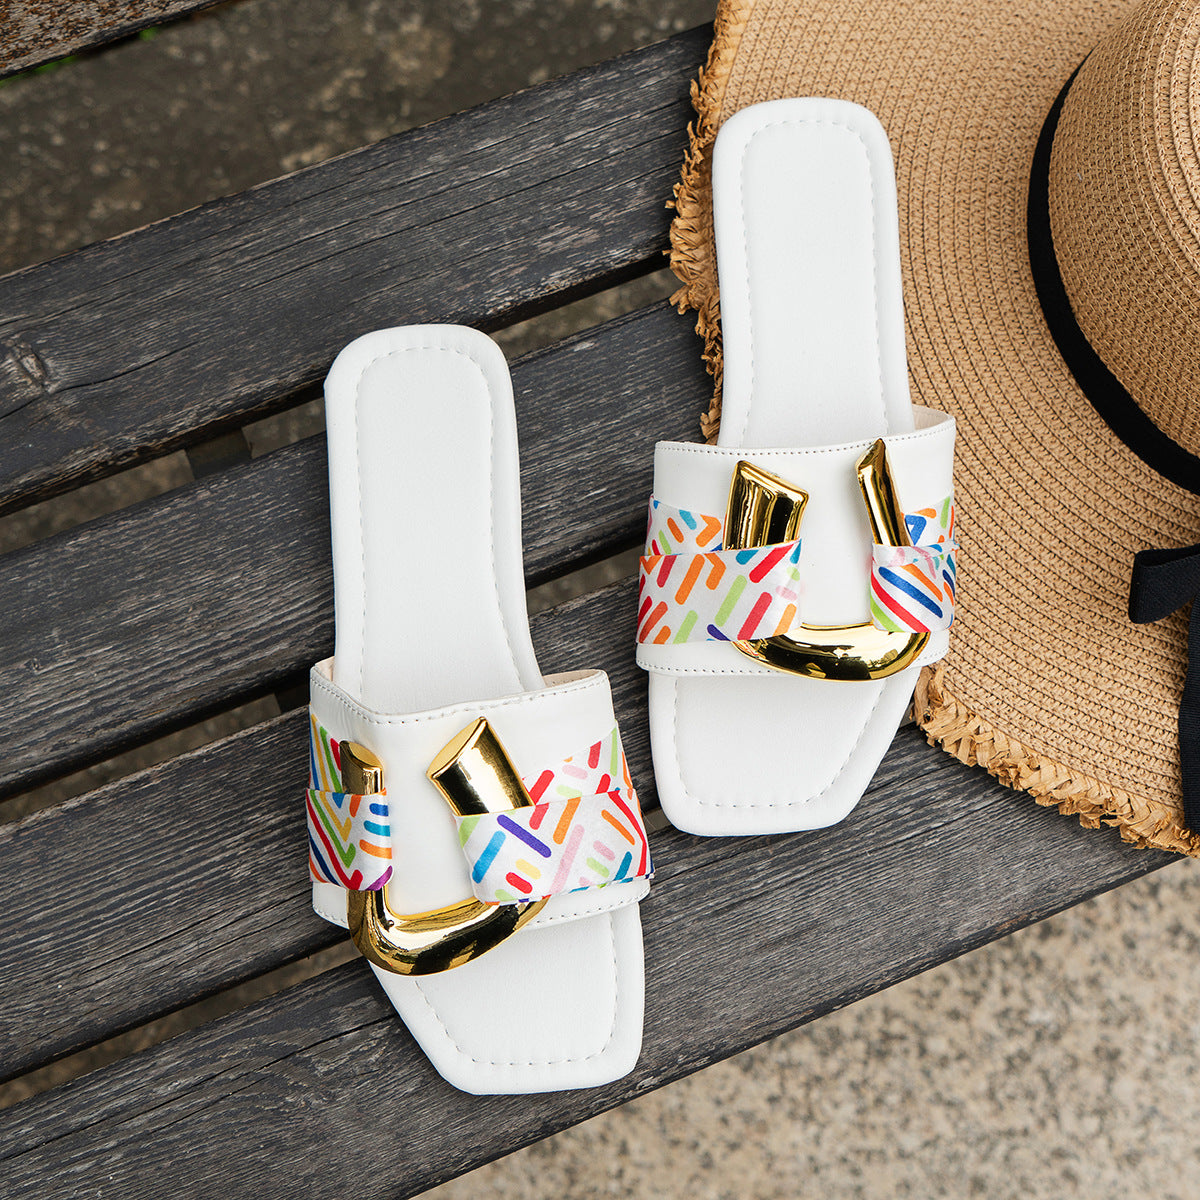 sandals  | Square Toe Flat Sandals Metal Buckle Slippers Summer Beach Shoes Women | [option1] |  [option2]| thecurvestory.myshopify.com